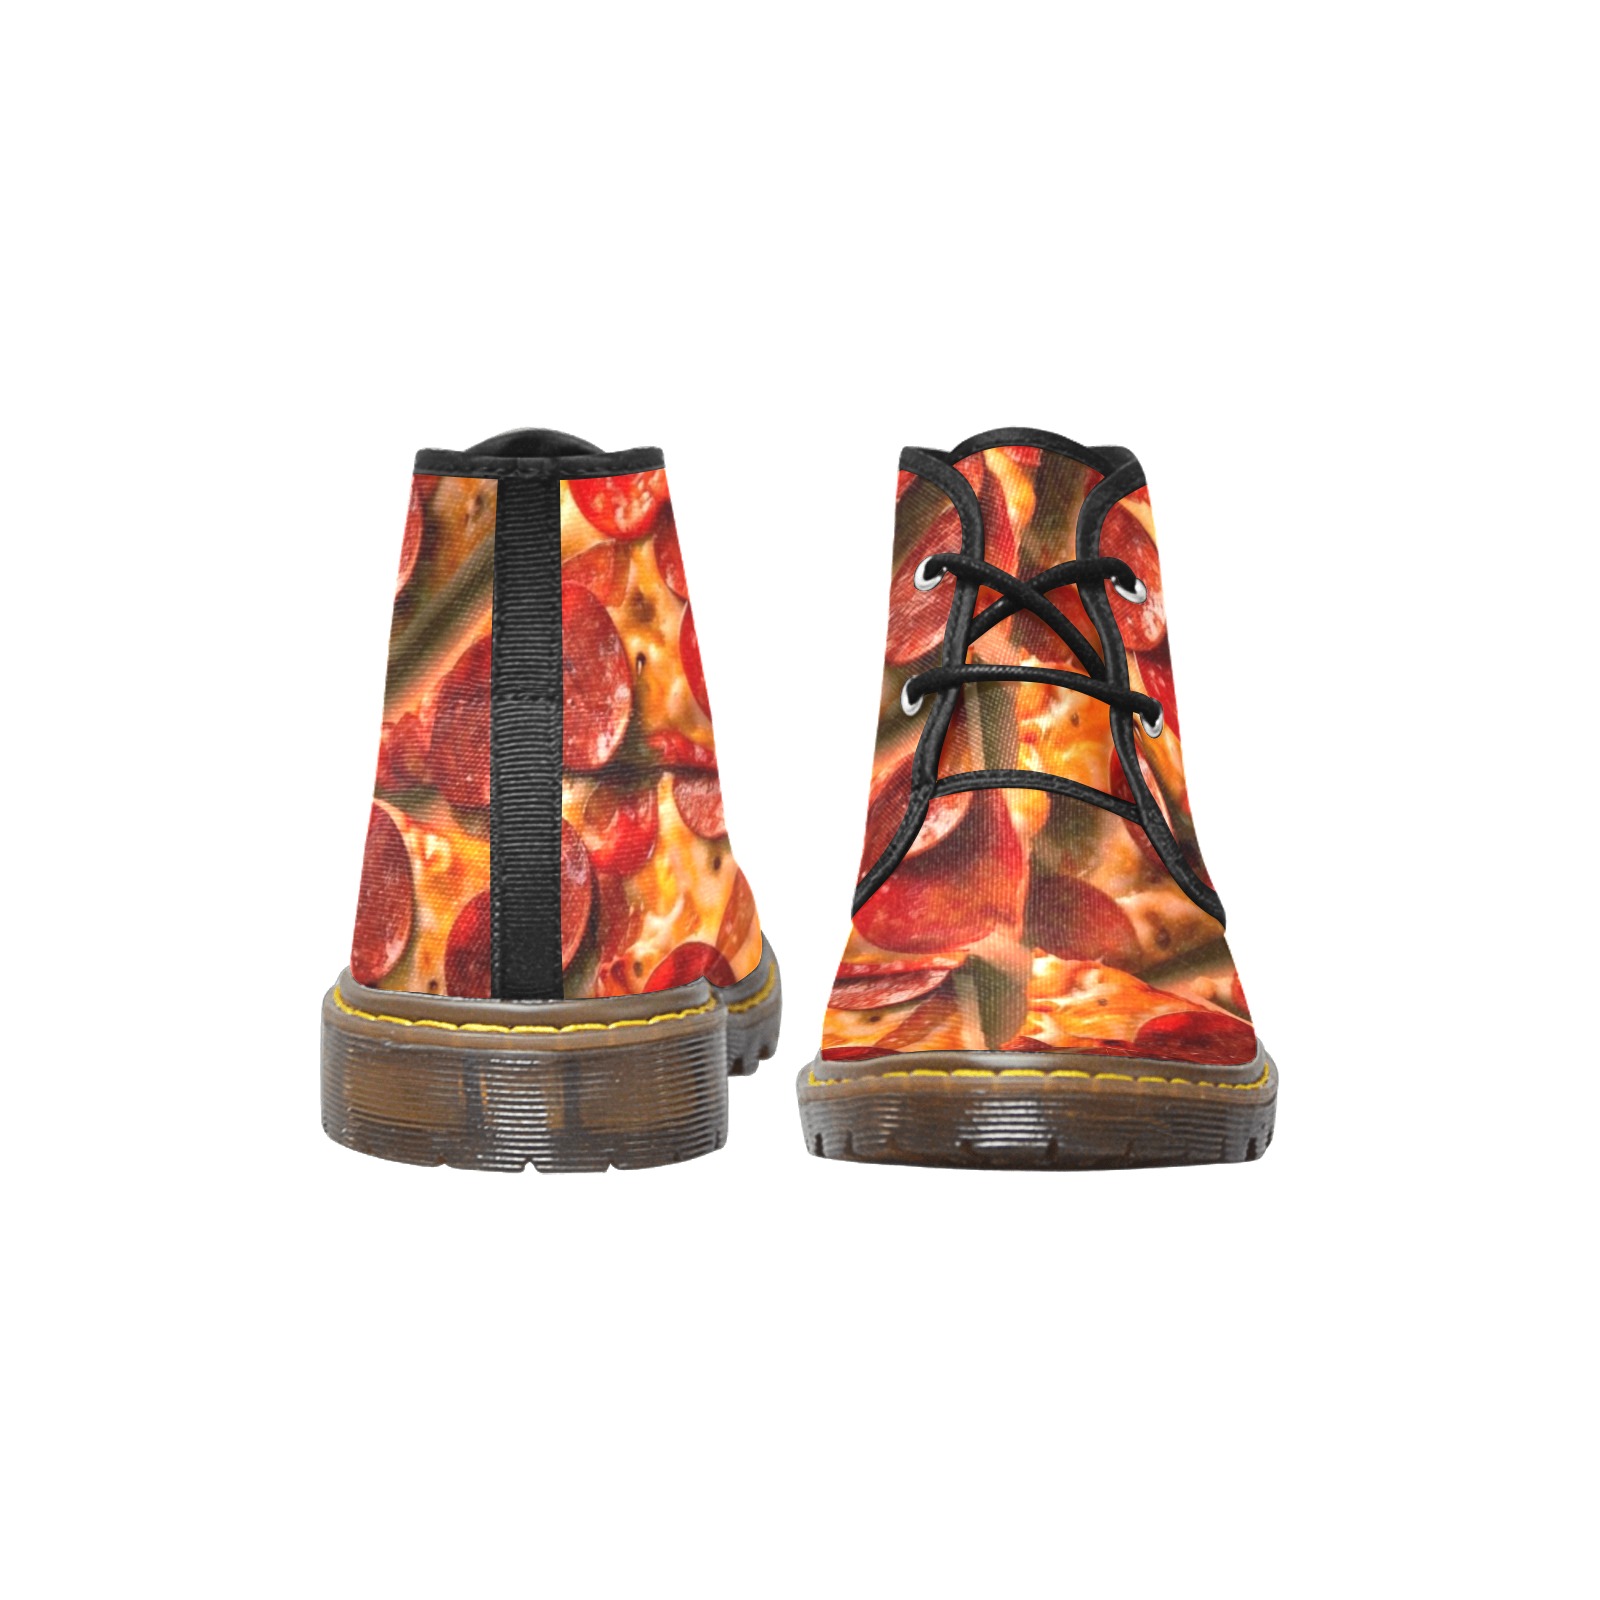 PEPPERONI PIZZA 11 Women's Canvas Chukka Boots (Model 2402-1)